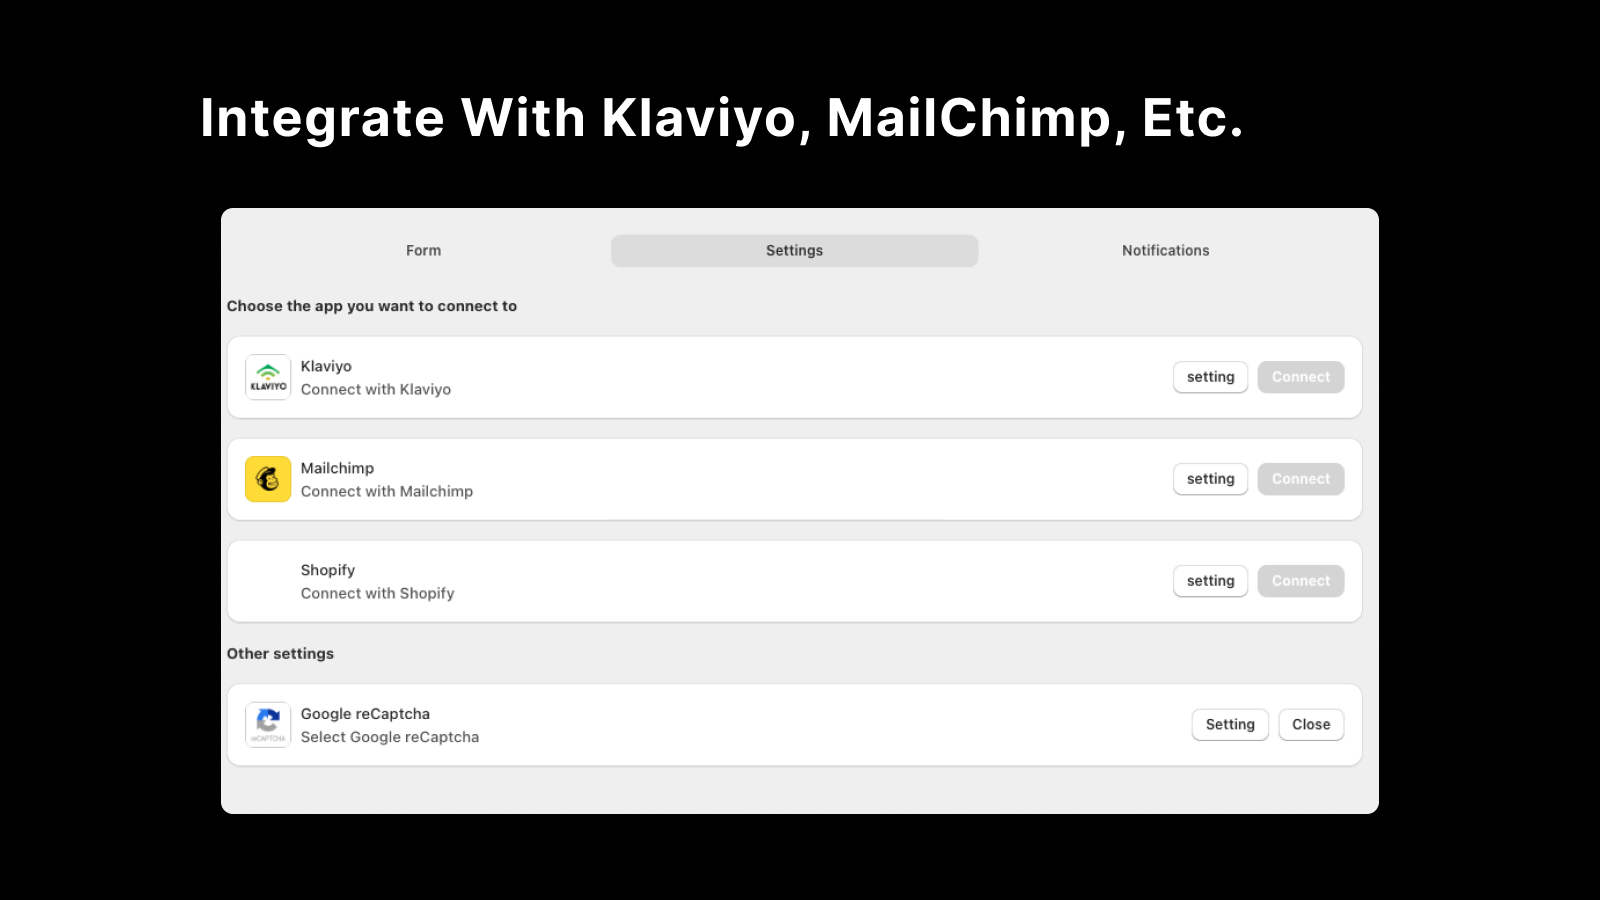 Integrate with Klaviyo, MailChimp, Etc.